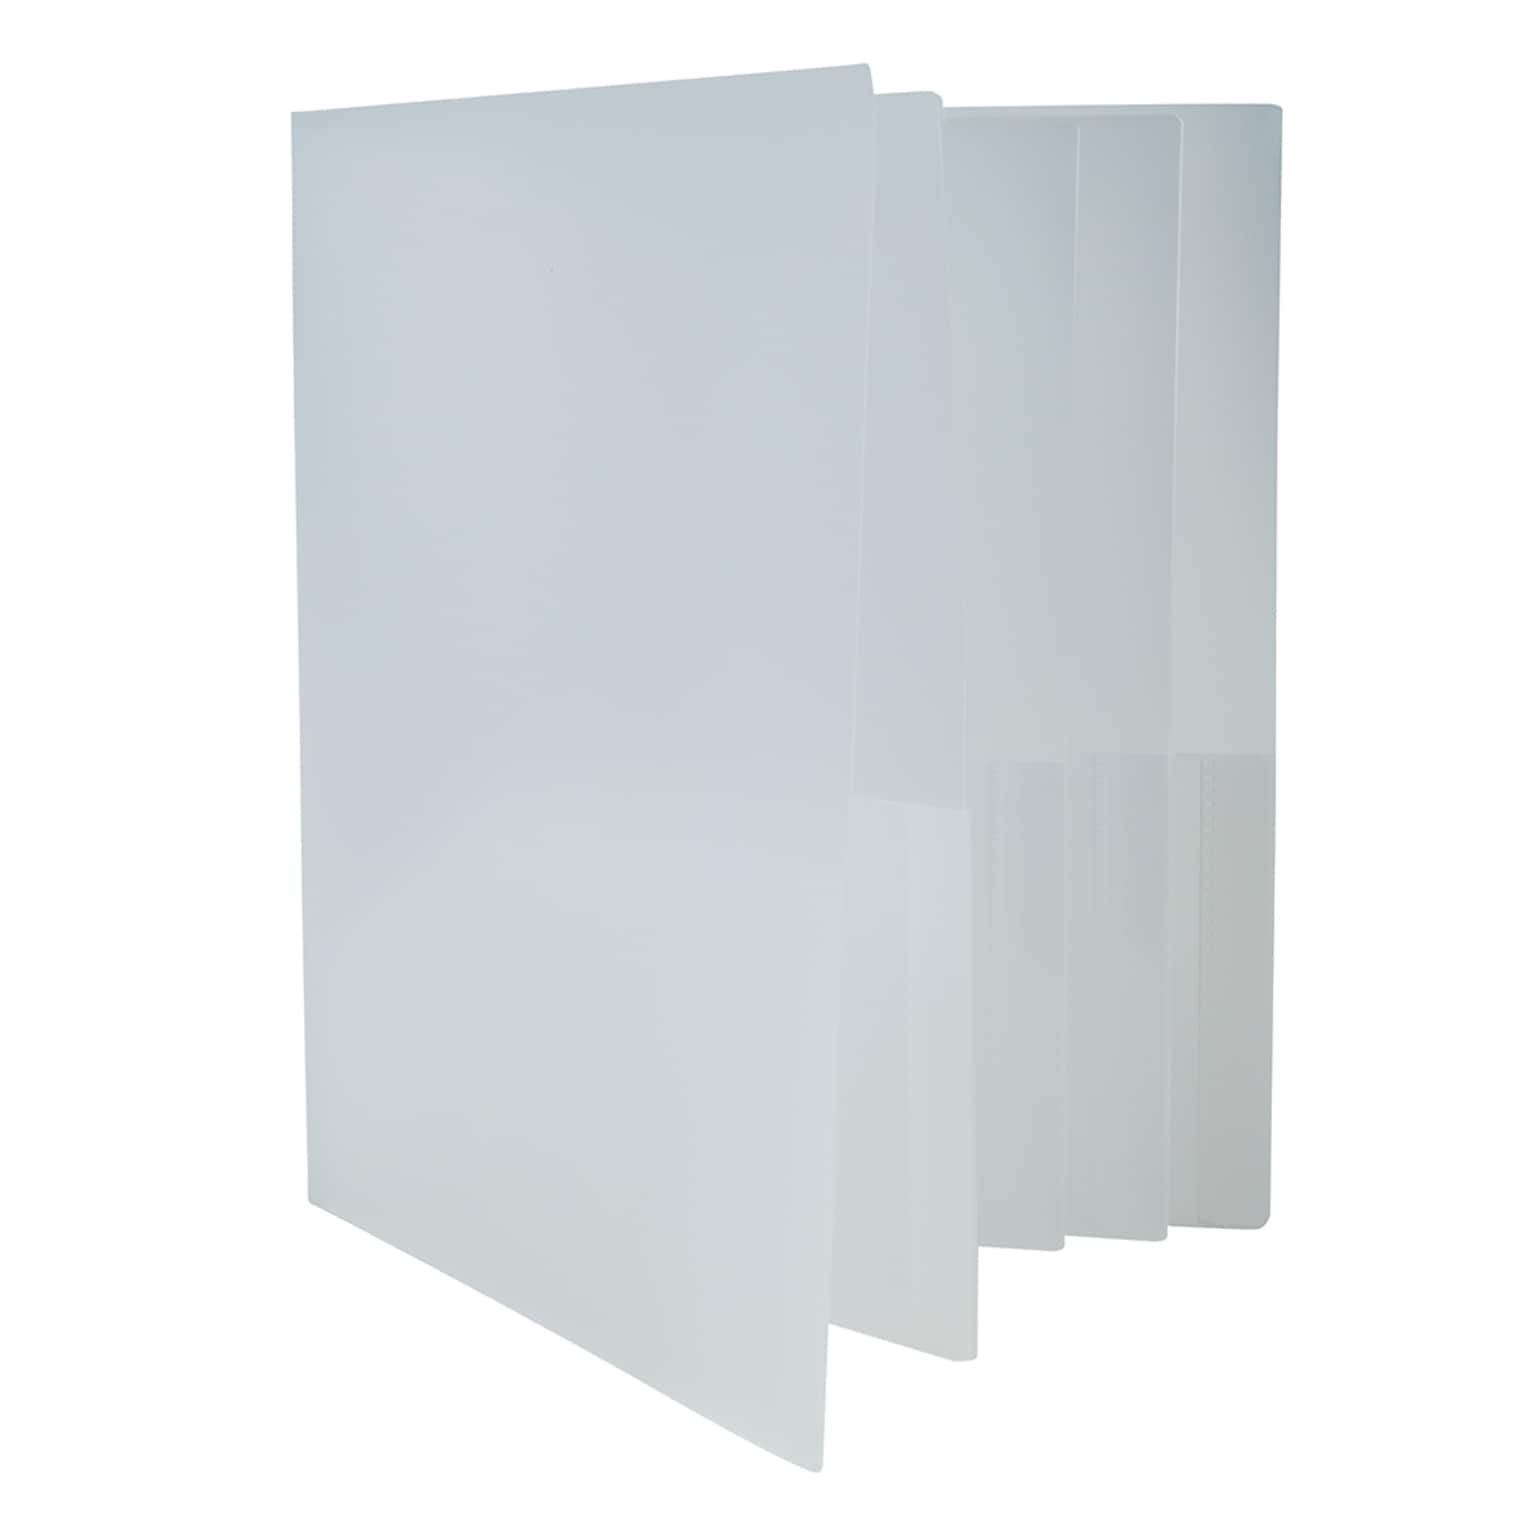 JAM Paper 10-Pocket Heavy Duty Folders, Clear, 3/Pack (389MP10clc)